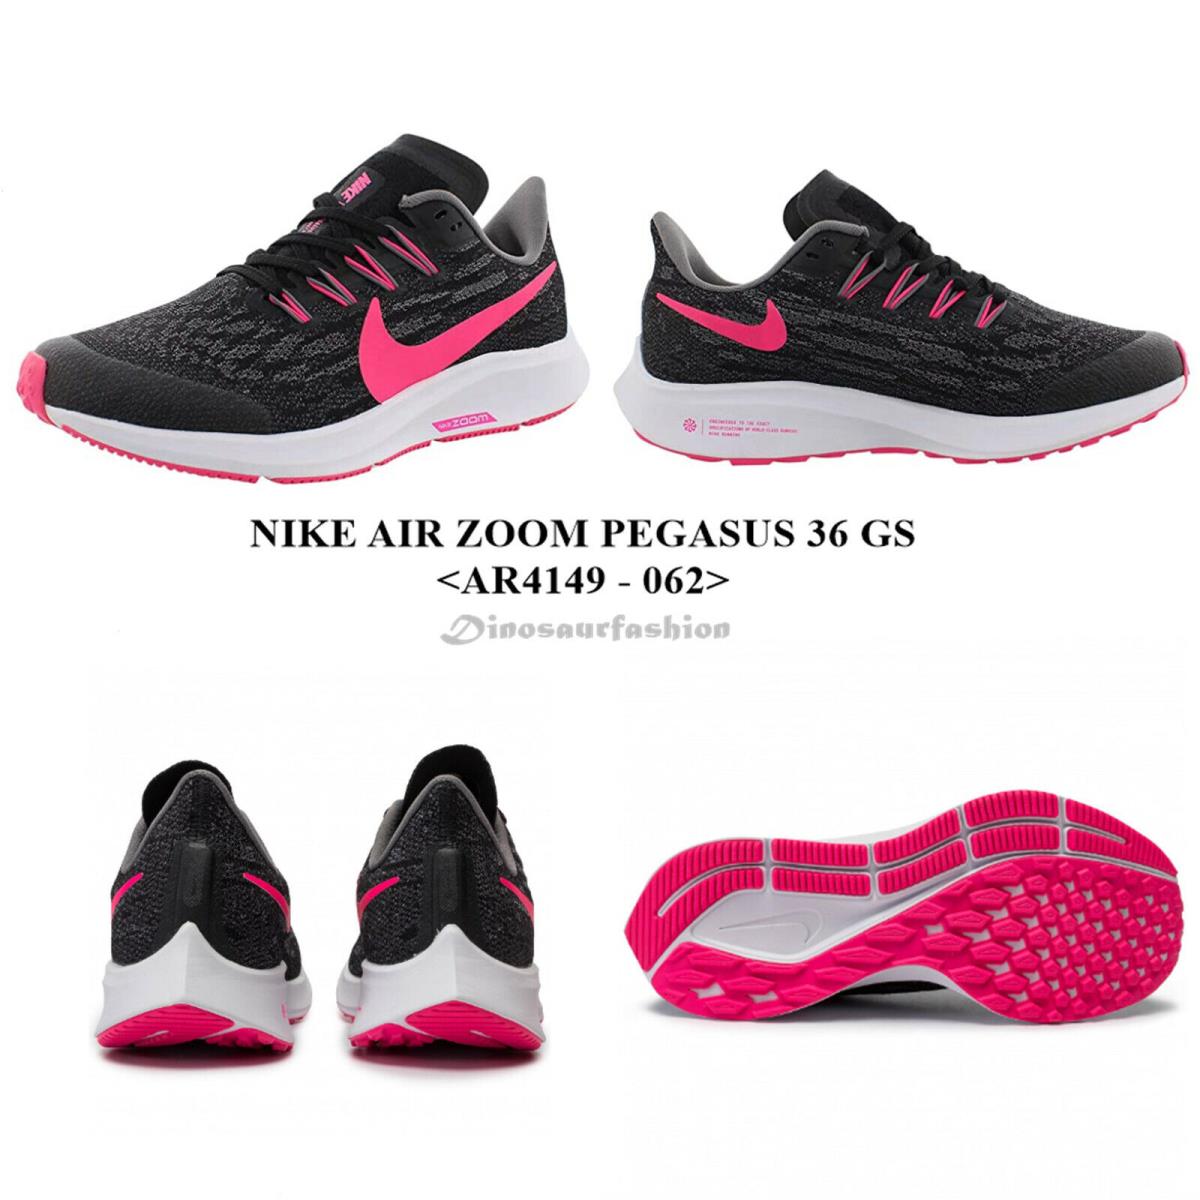 Nike Air Zoom Pegasus 36 GS AR4149 - 062 Young Running/casual Shoe`s - BLACK/HYPER PINK-GUNSMOKE